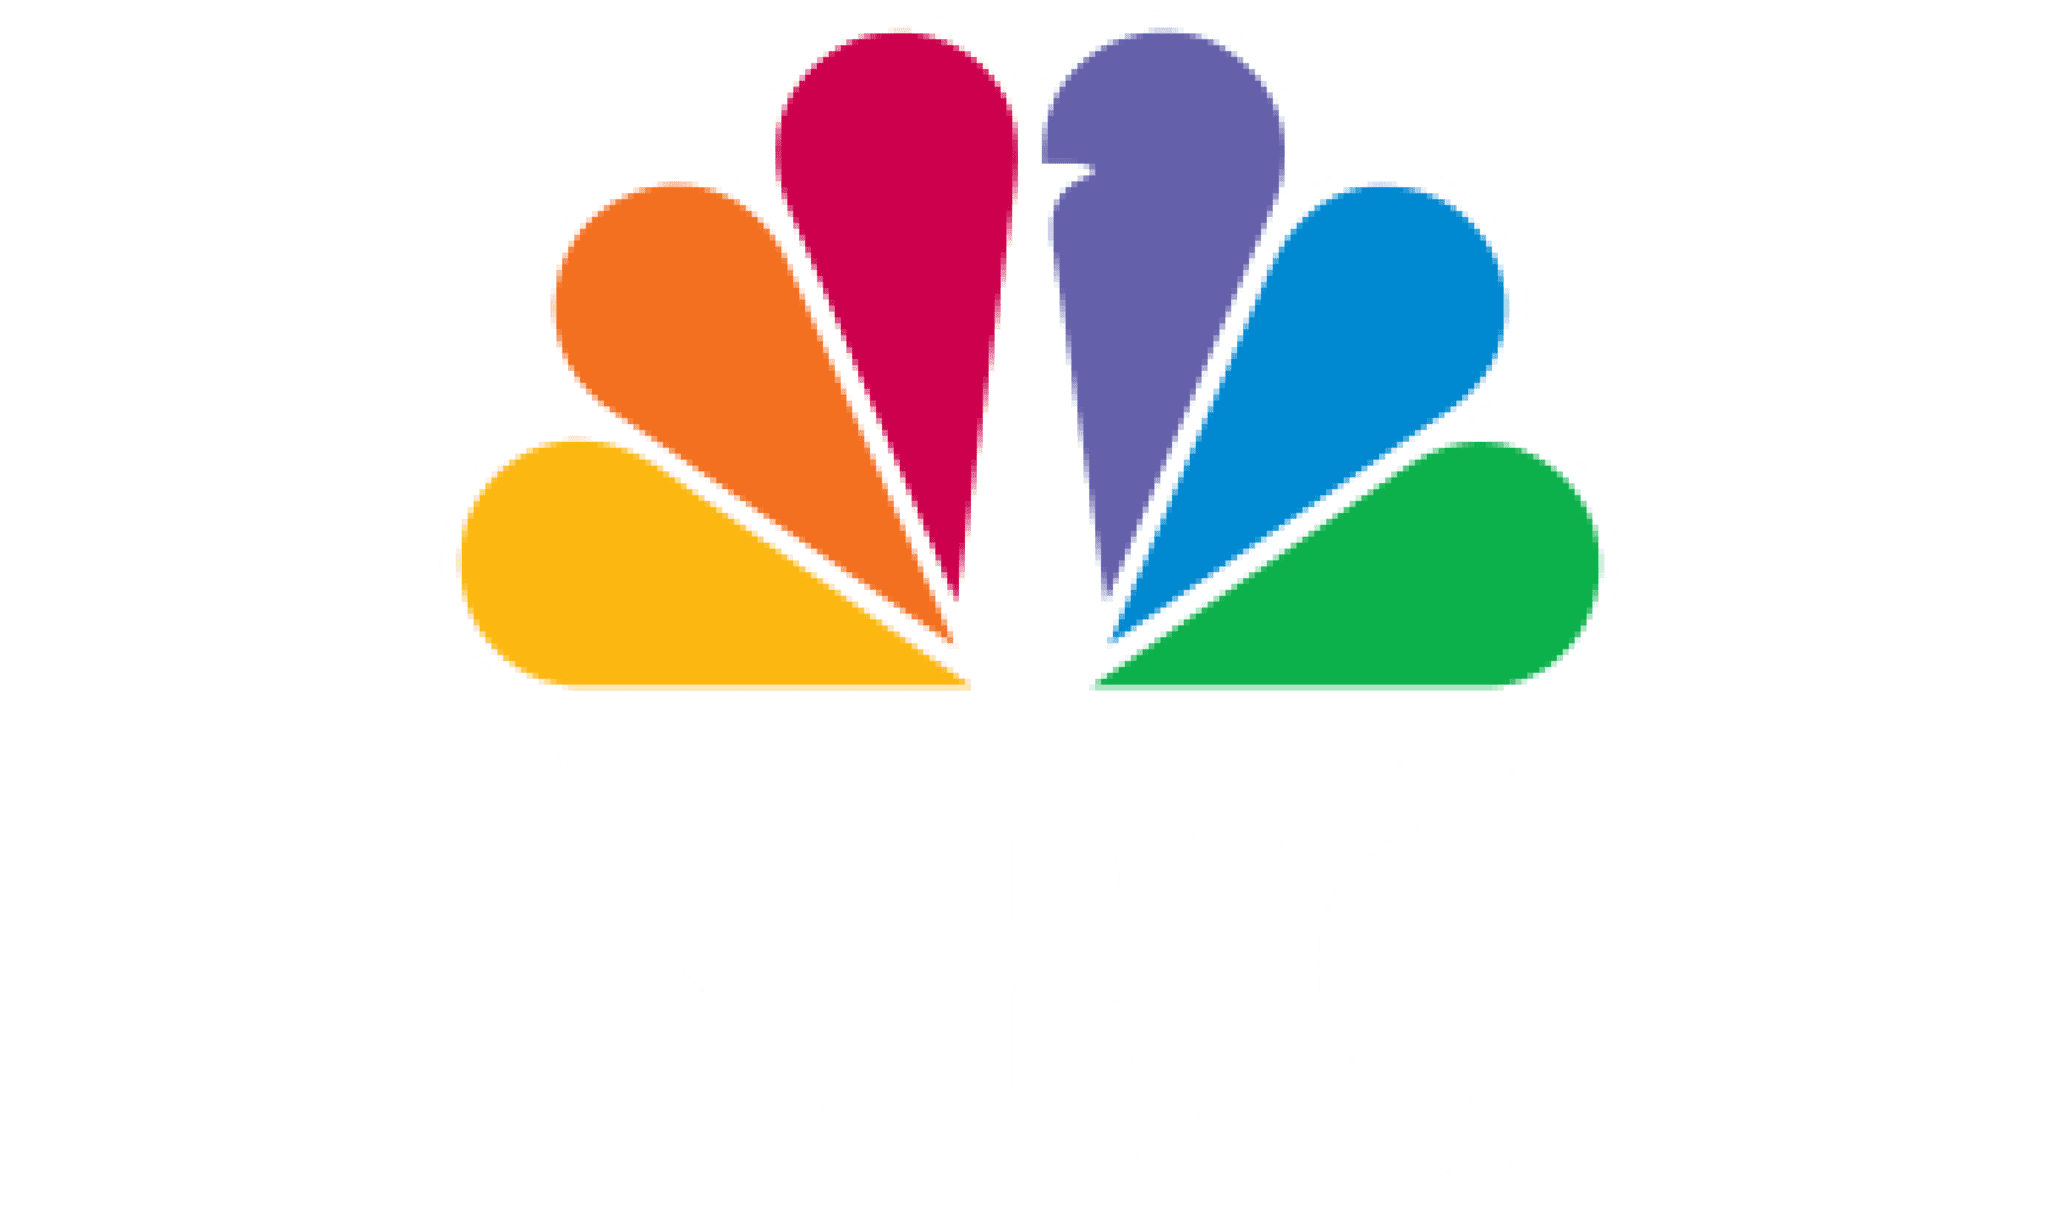 The NBC Logo